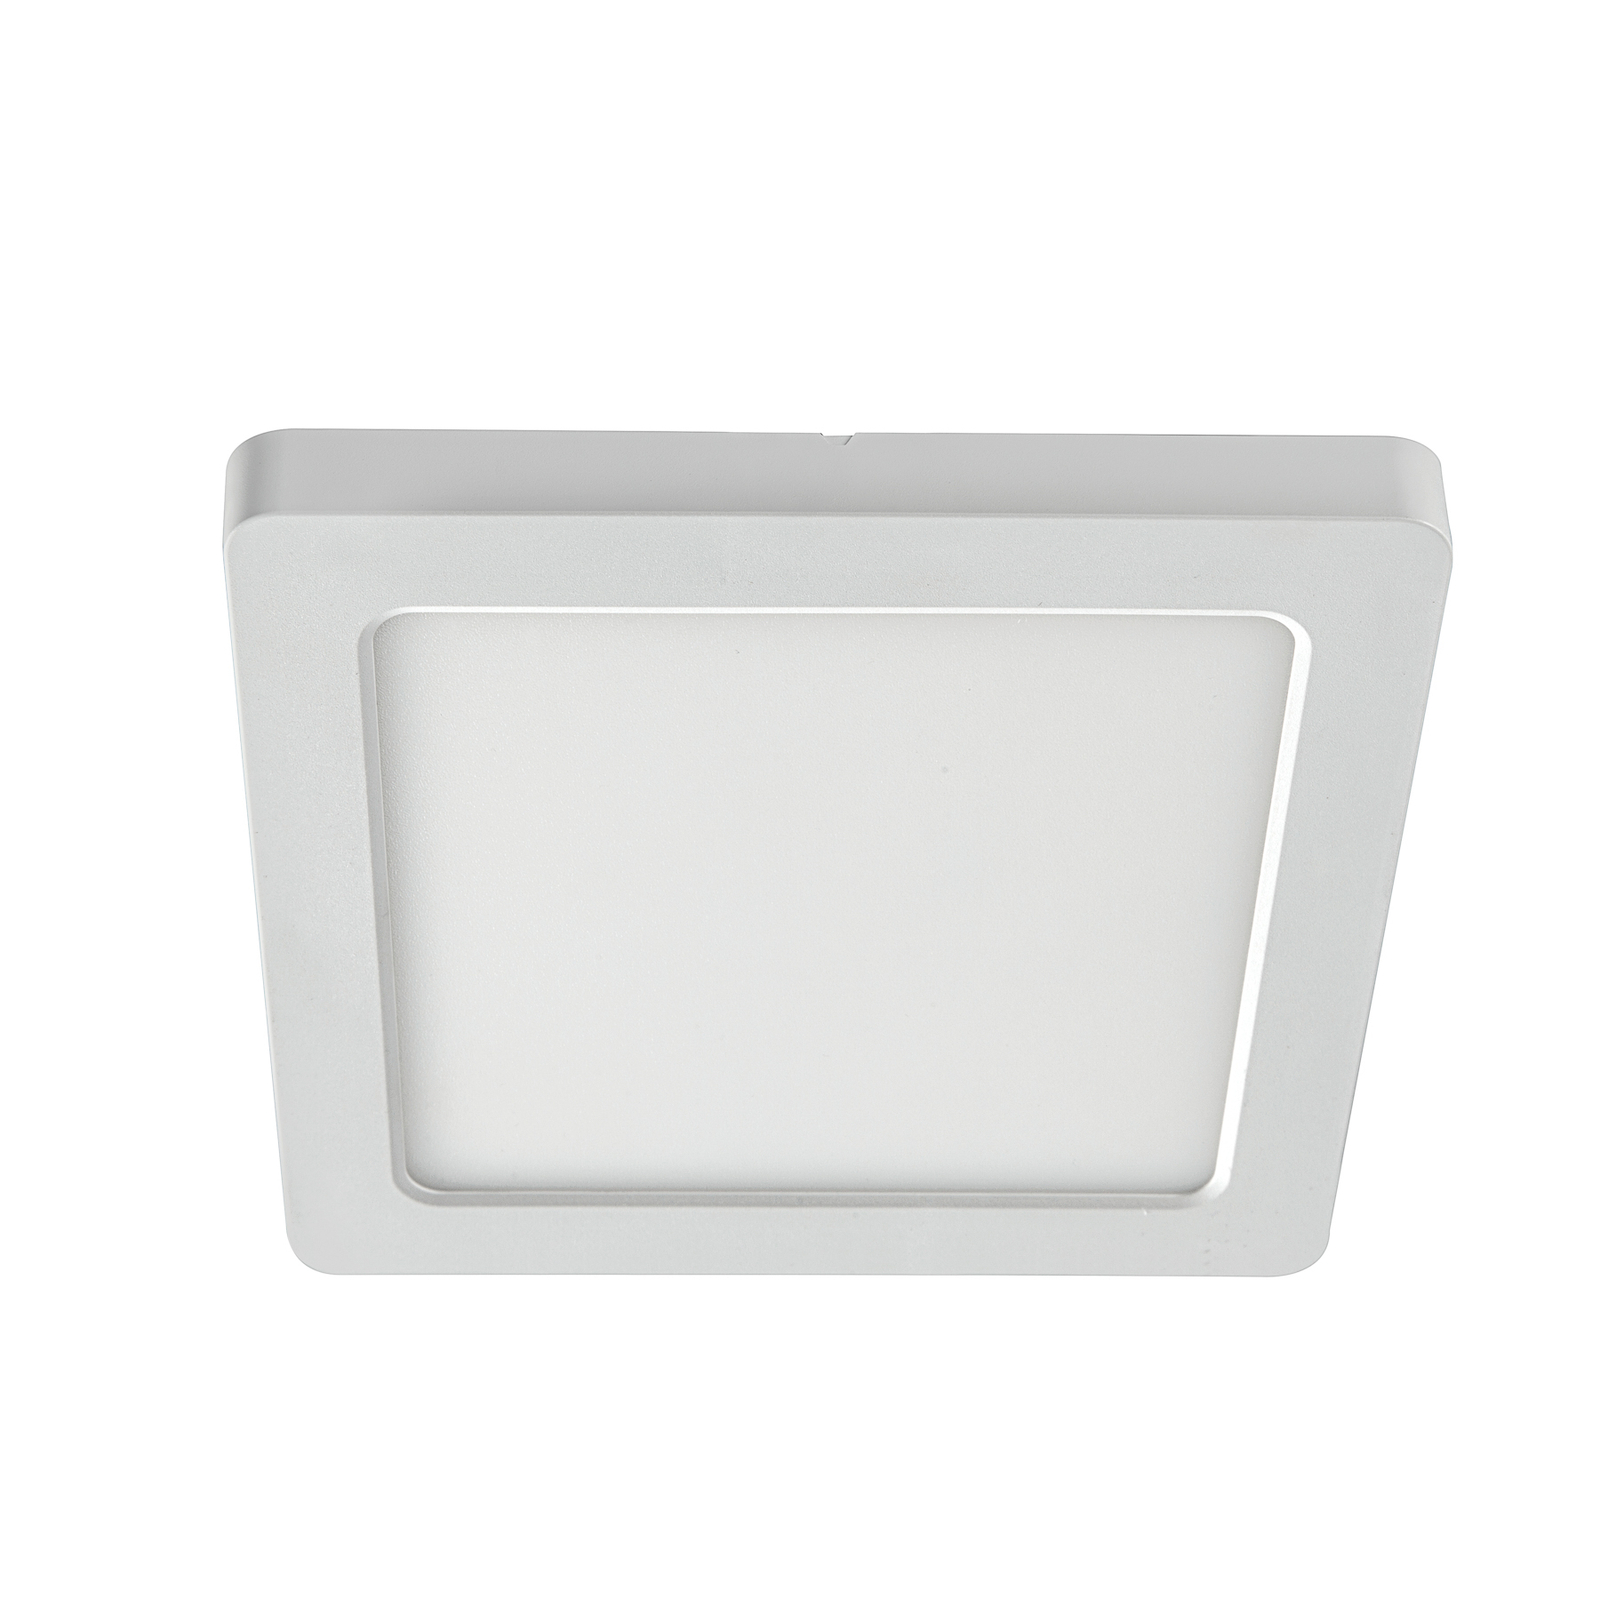 LED-Panel Selesto, quadratisch, dimmbar, weiß